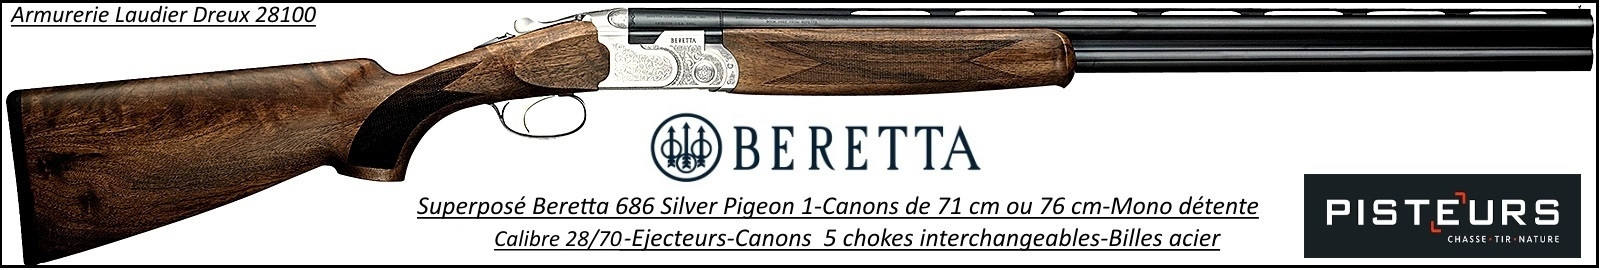 Superposé Beretta 686 Silver Pigeon 1 Calibre 28/70 Canons 76 cm chasse -Promotion-Ref  40025